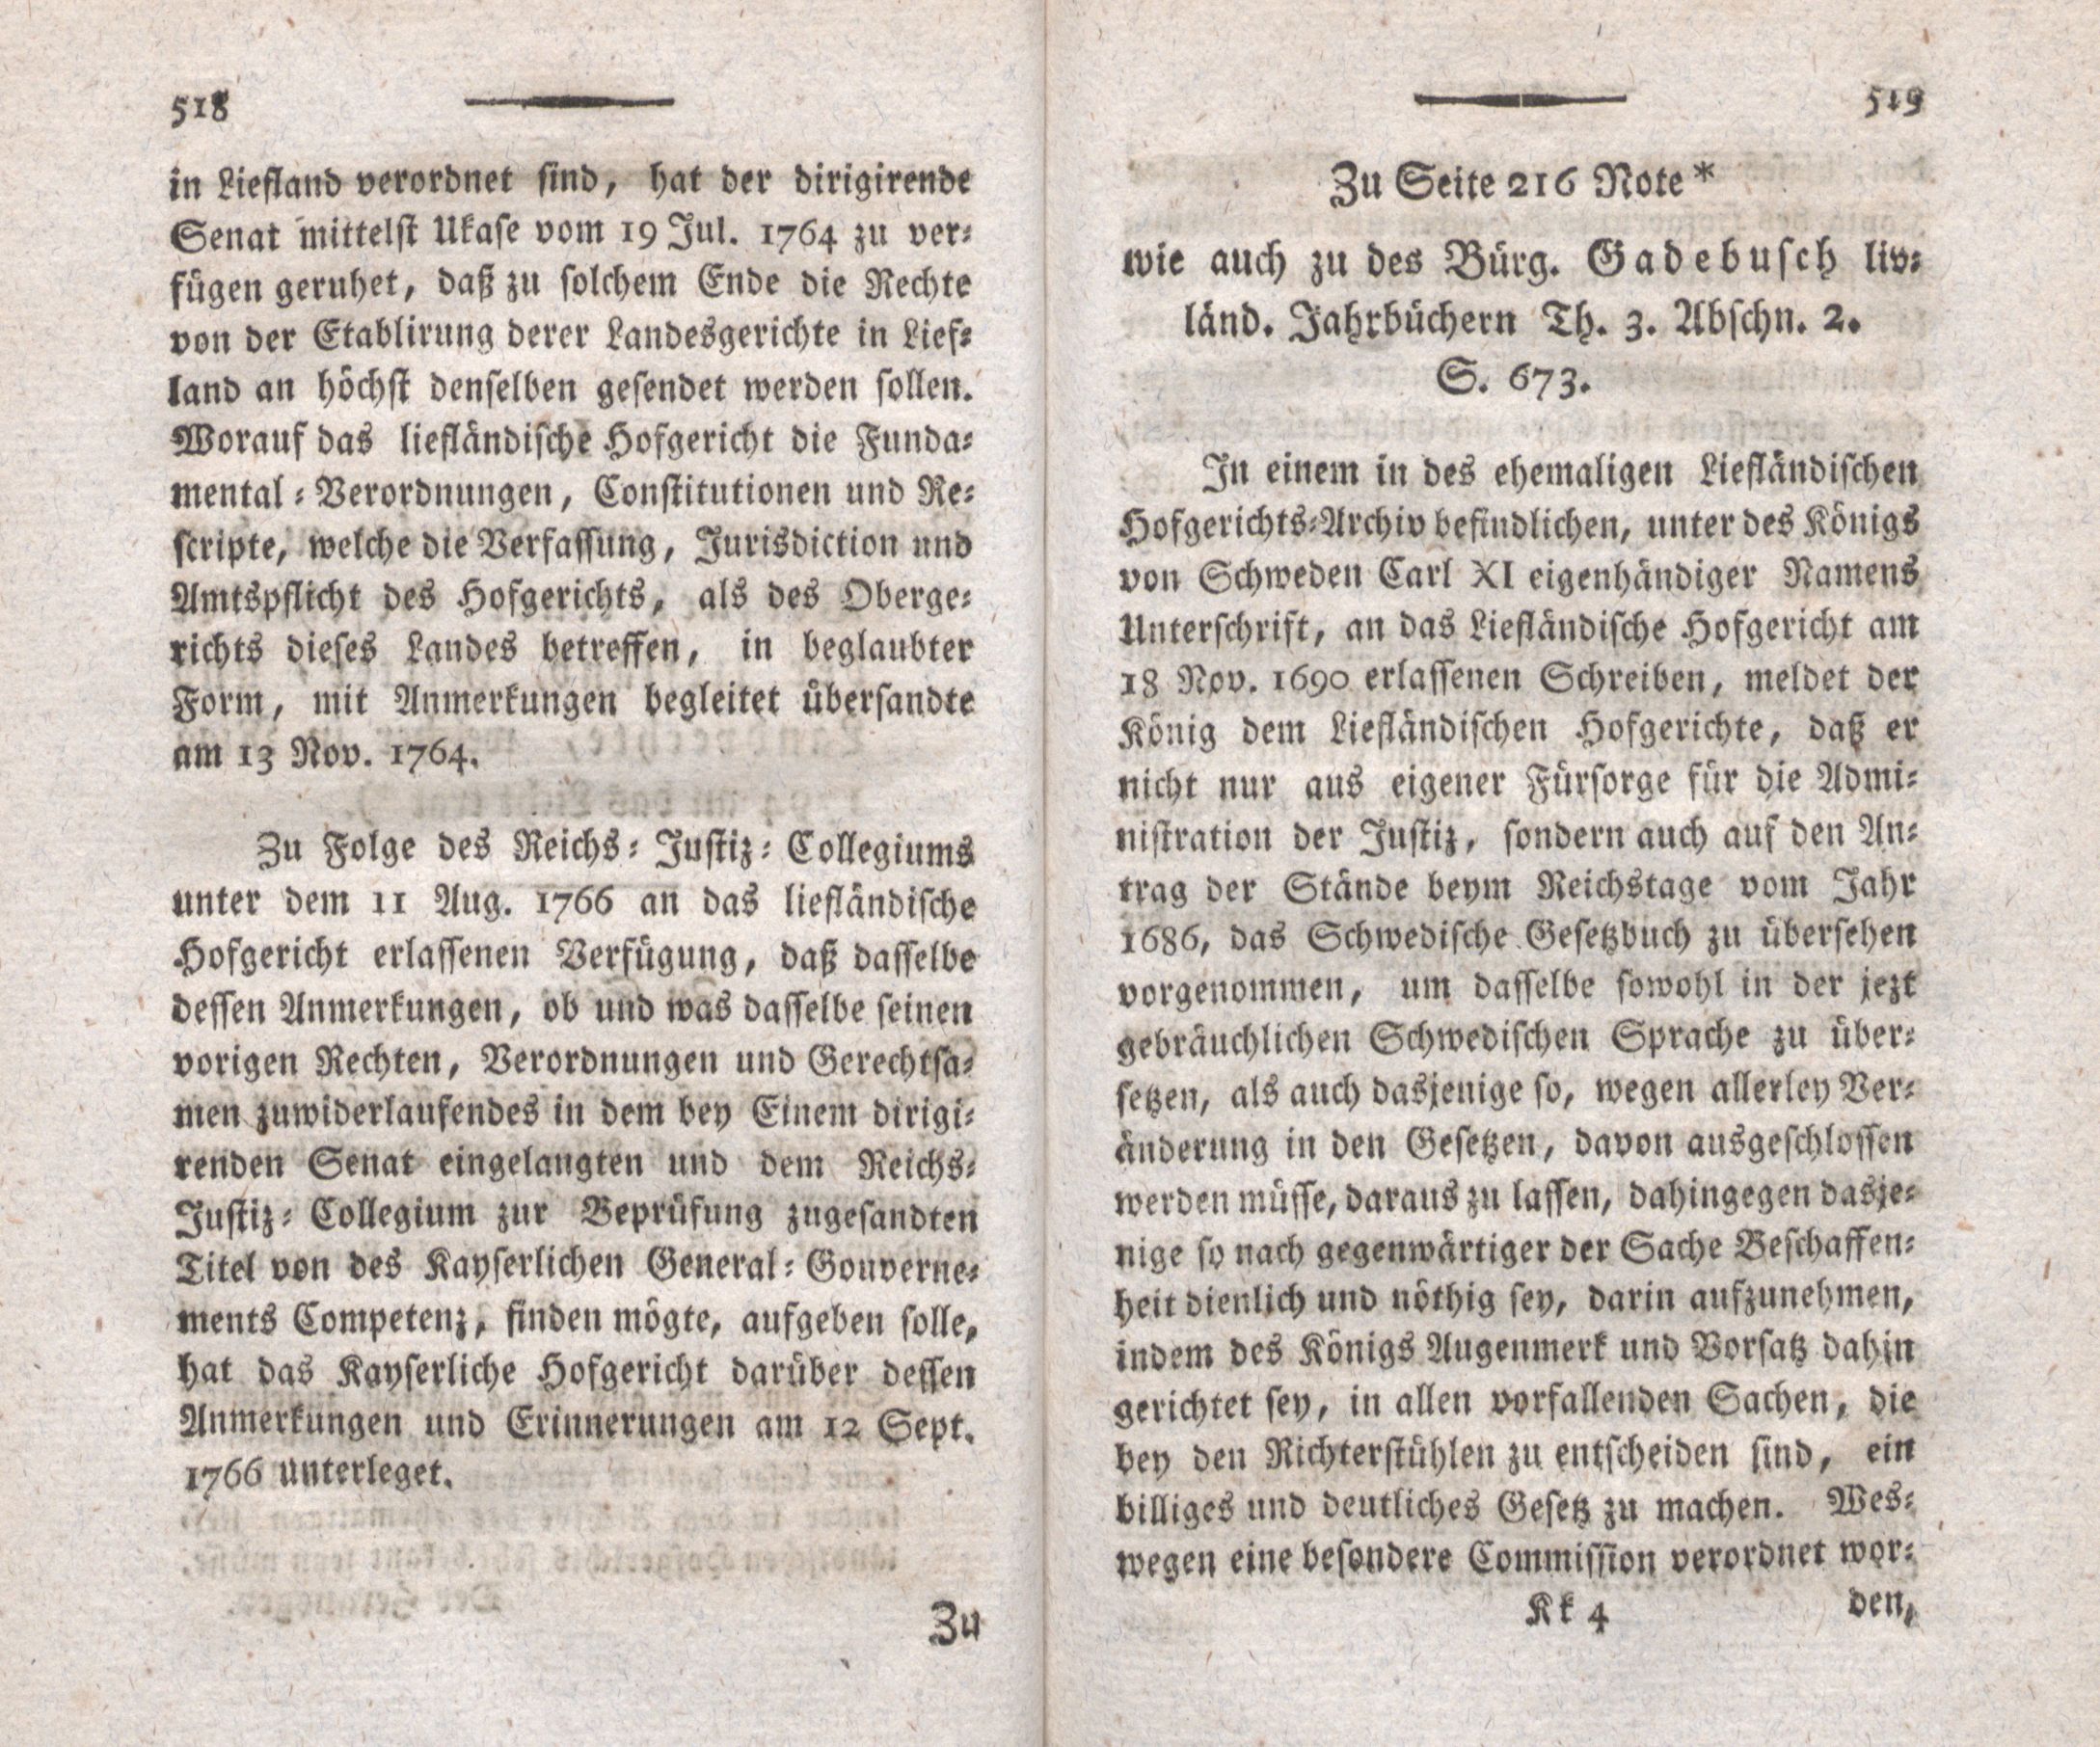 Neue nordische Miscellaneen [11-12] (1795) | 272. (518-519) Main body of text